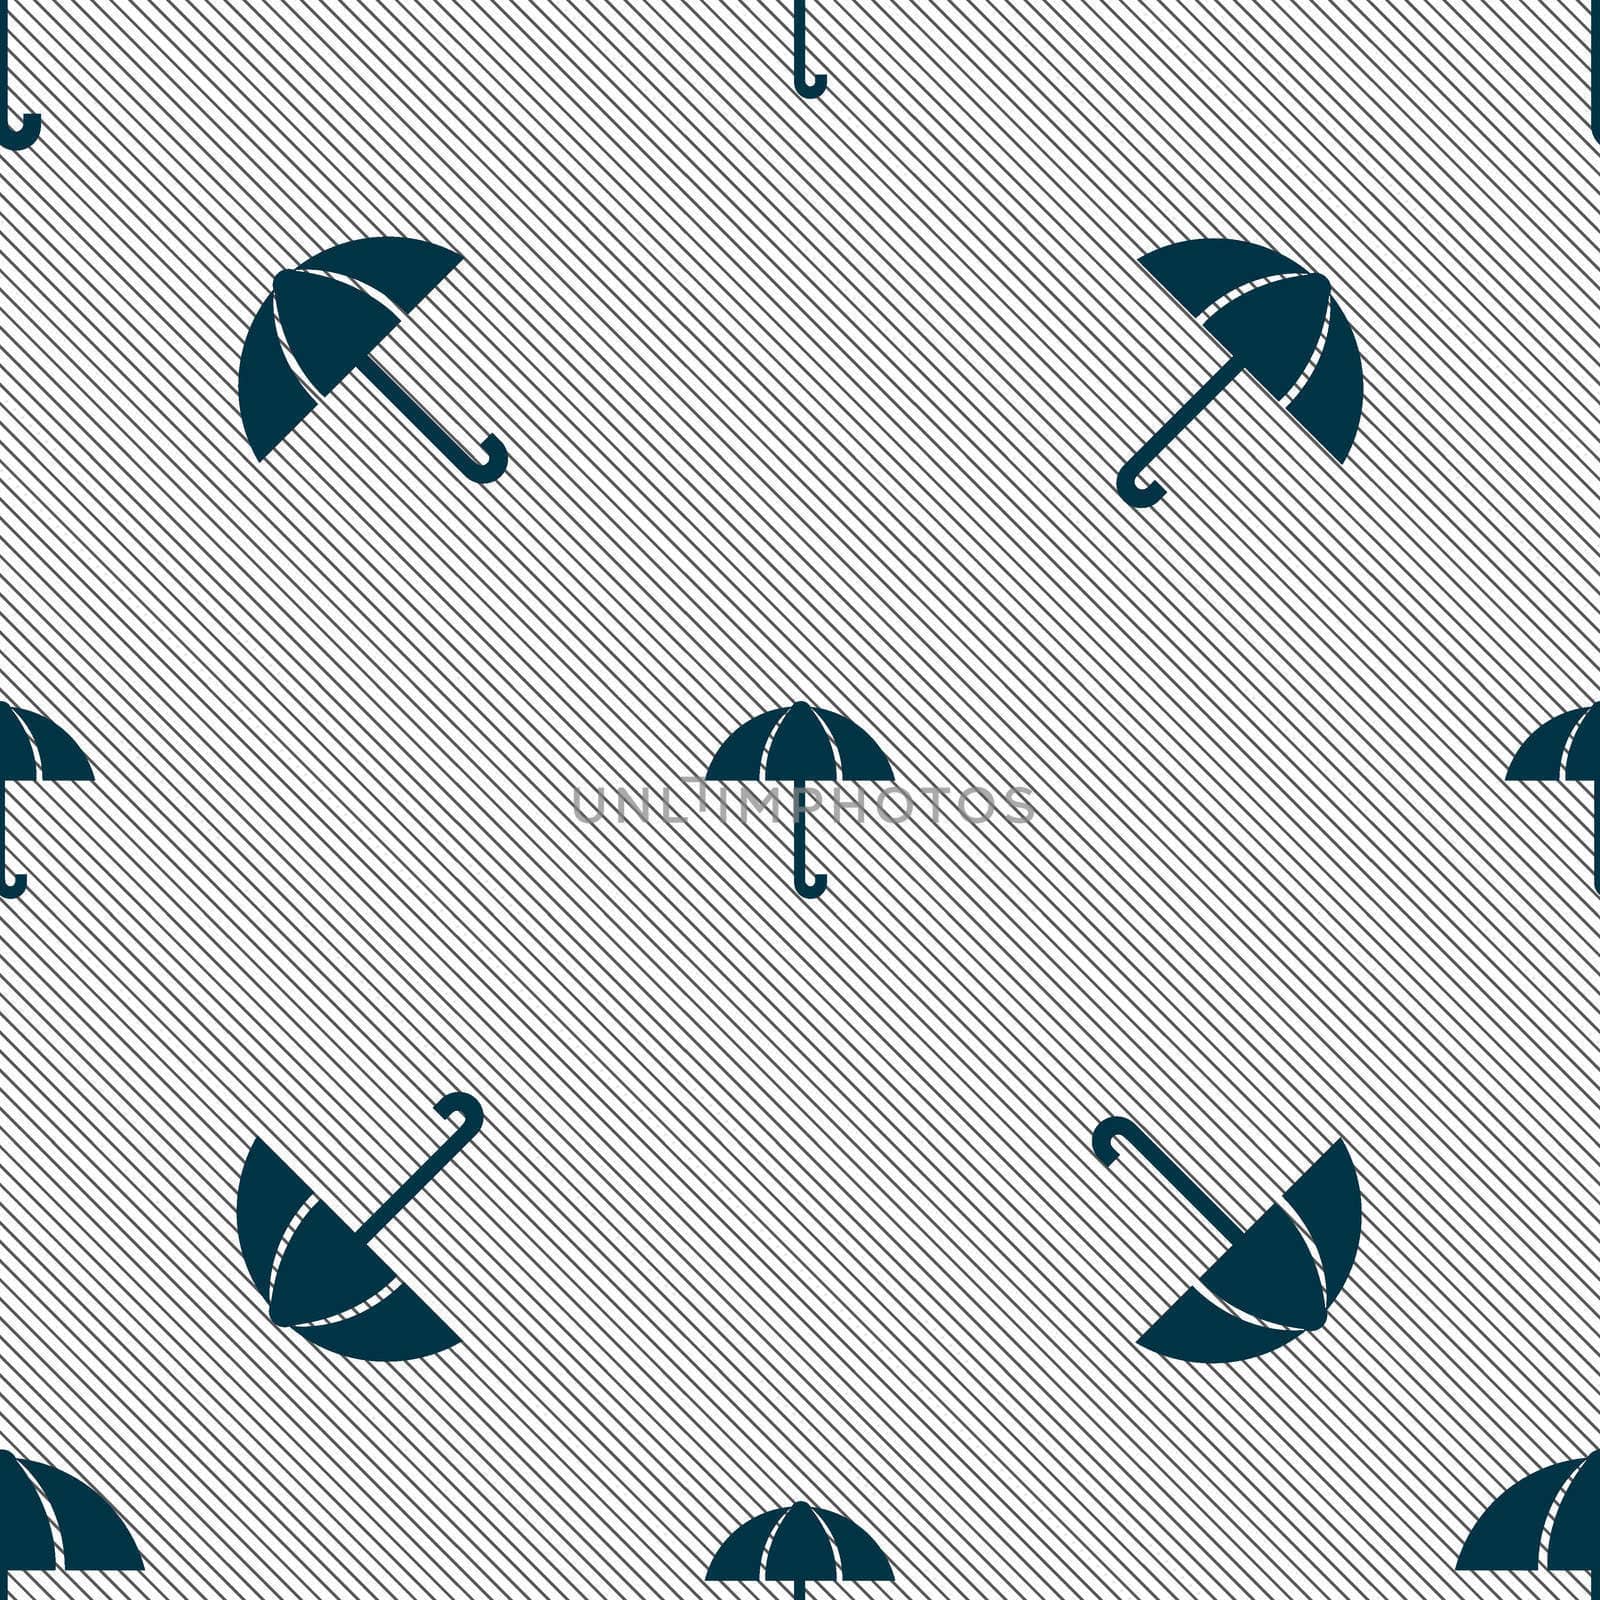 Umbrella sign icon. Rain protection symbol. Seamless pattern with geometric texture.  by serhii_lohvyniuk